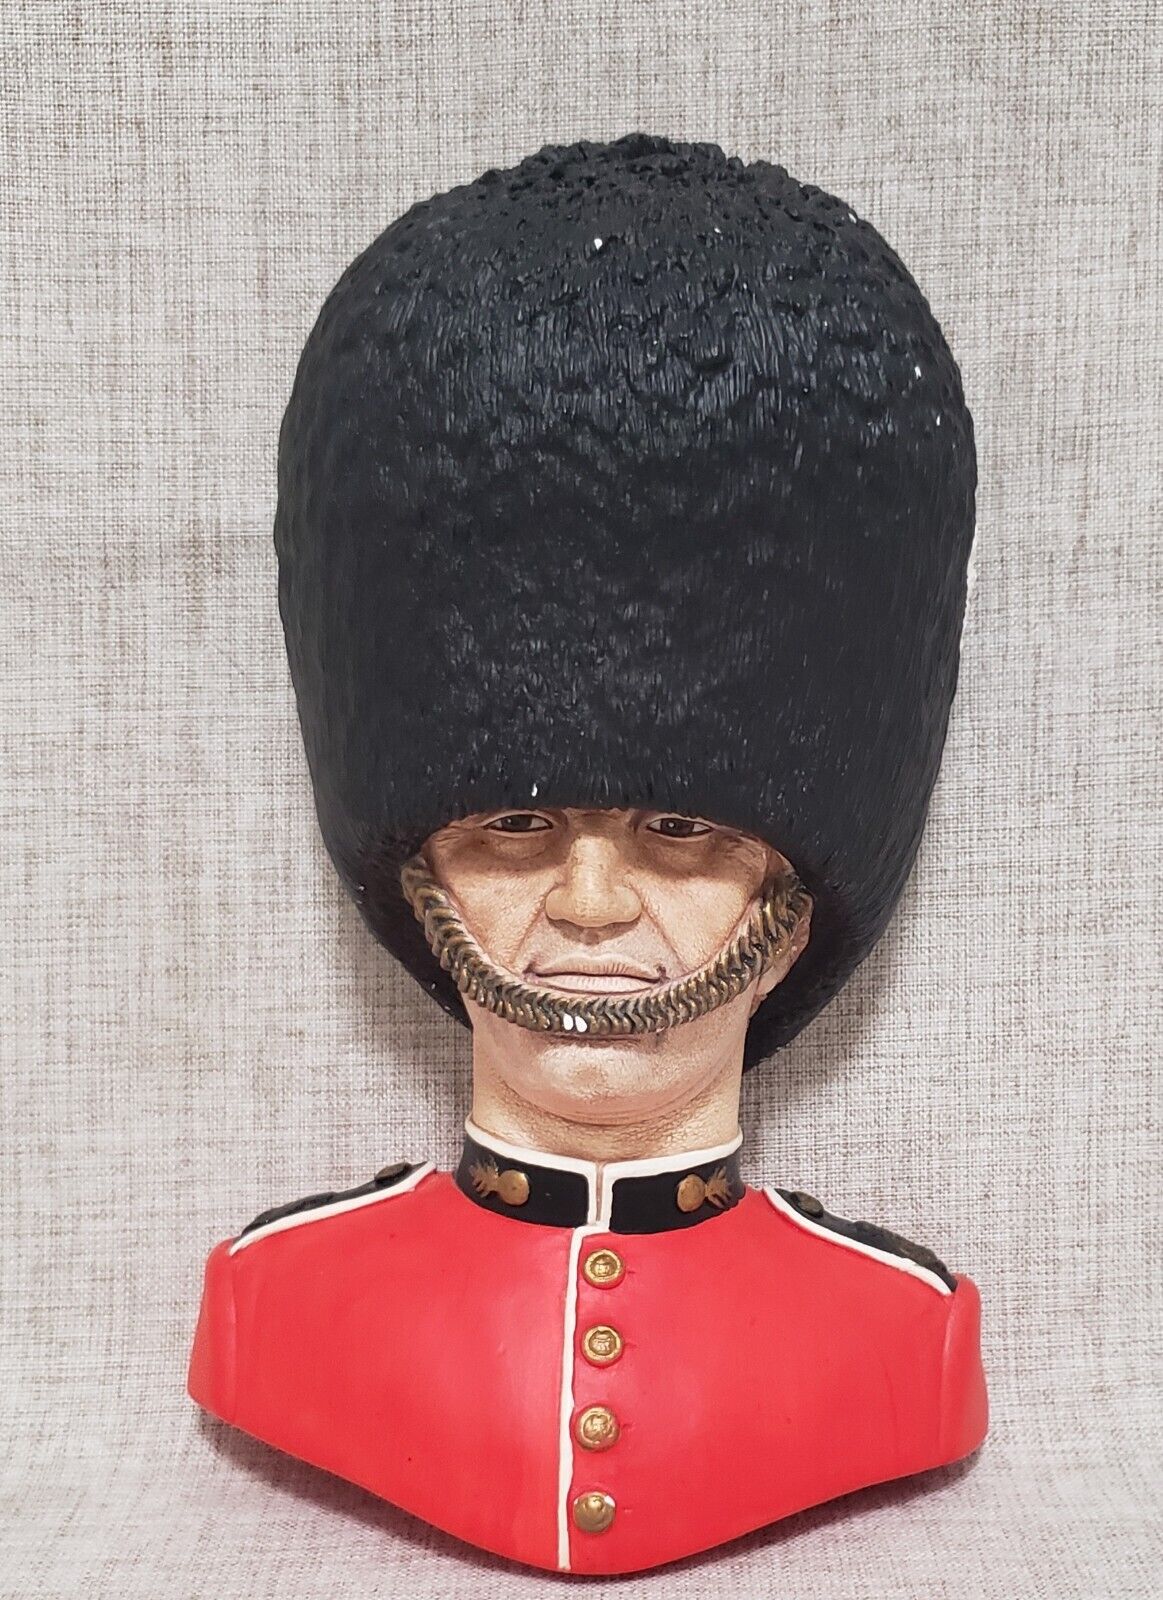 Bossons Congleton England Chalkware Guardsman 1986 Bust Head Sculpture Guard